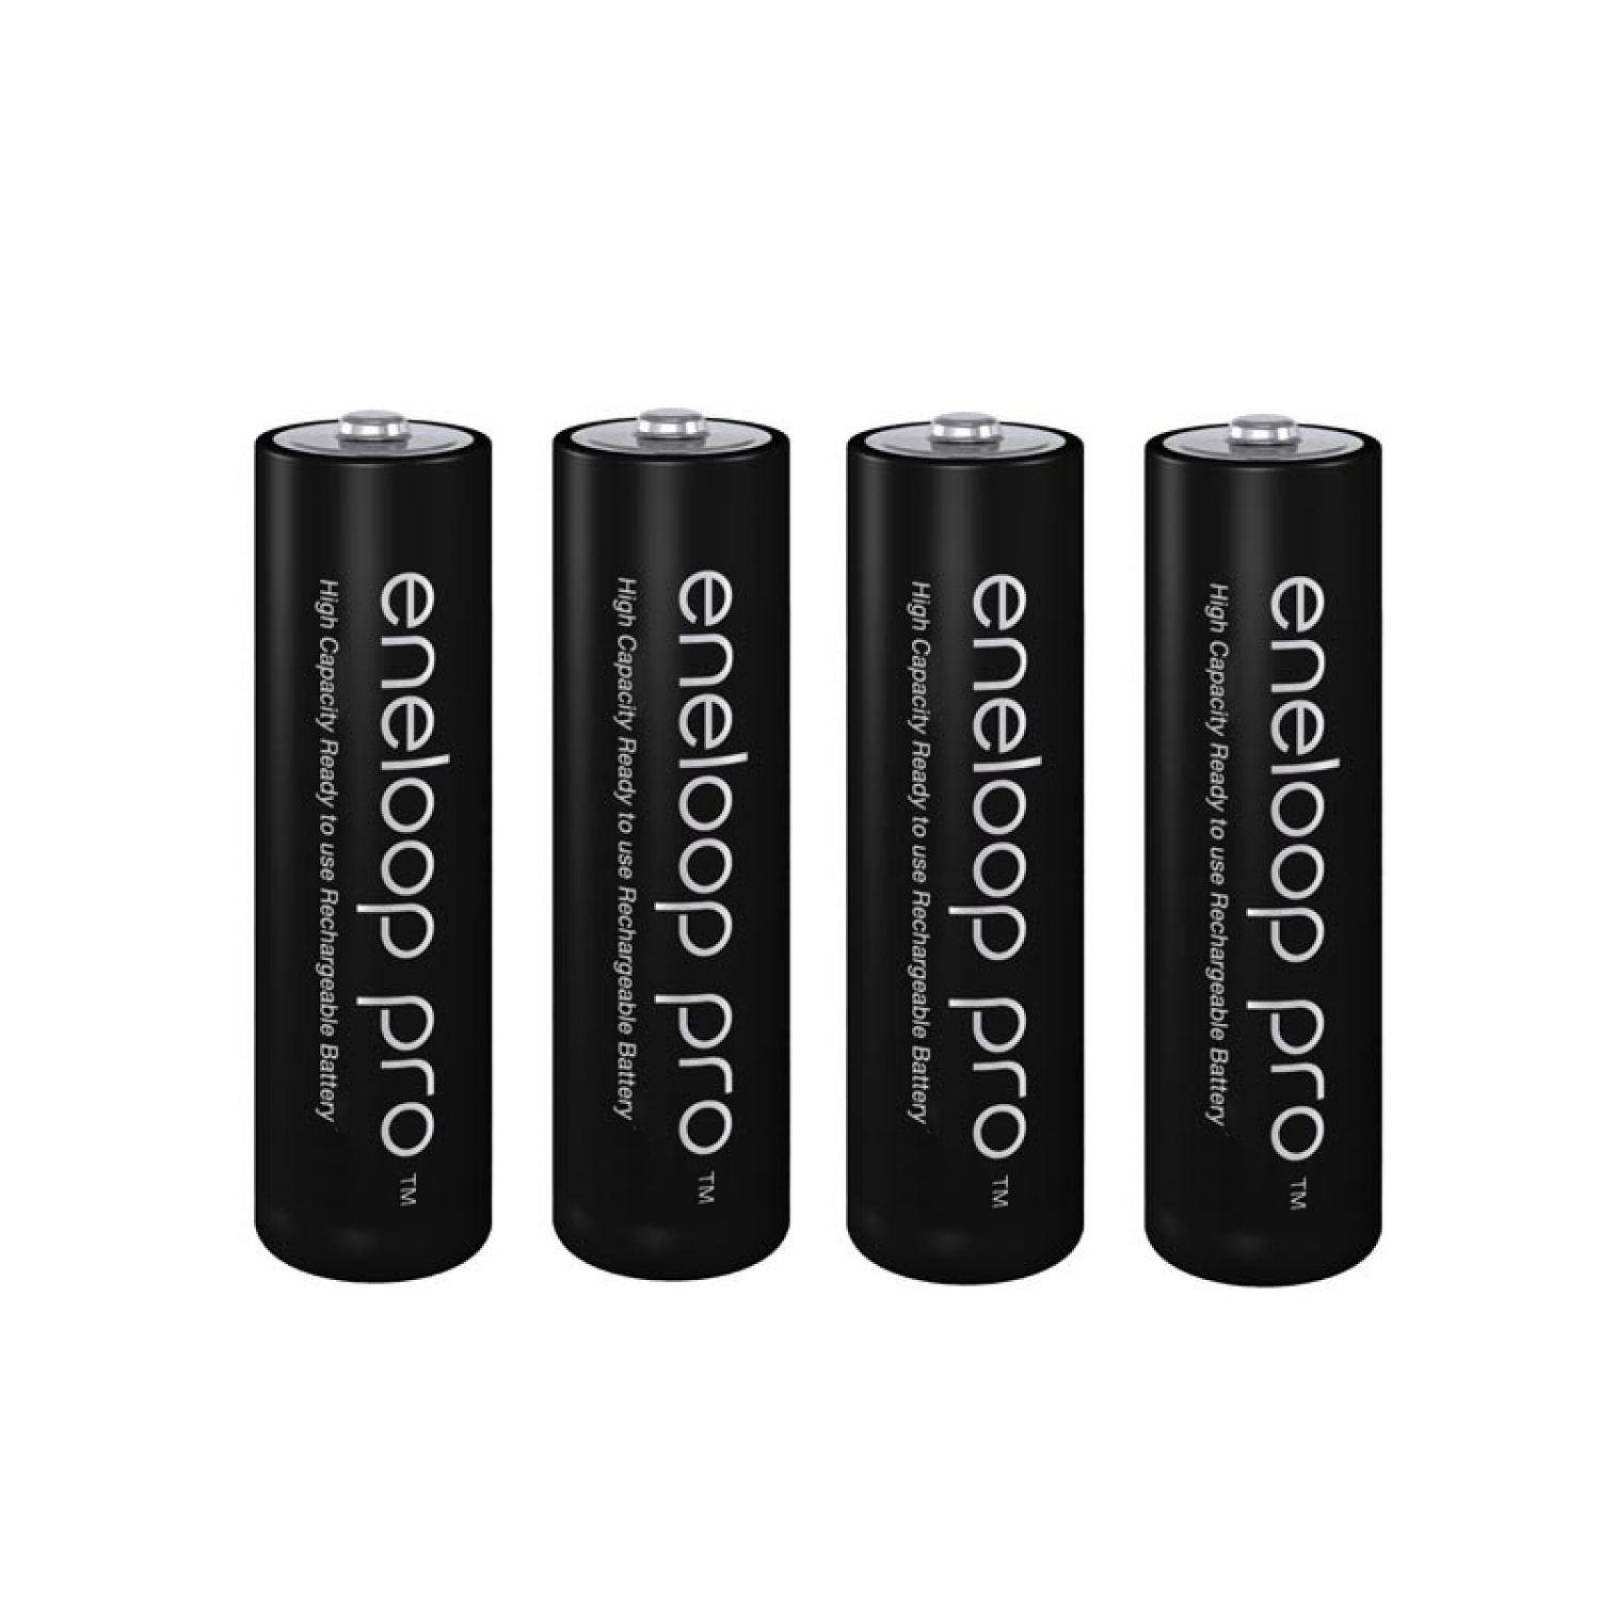  Baterías recargables precargadas AA Panasonic Eneloop